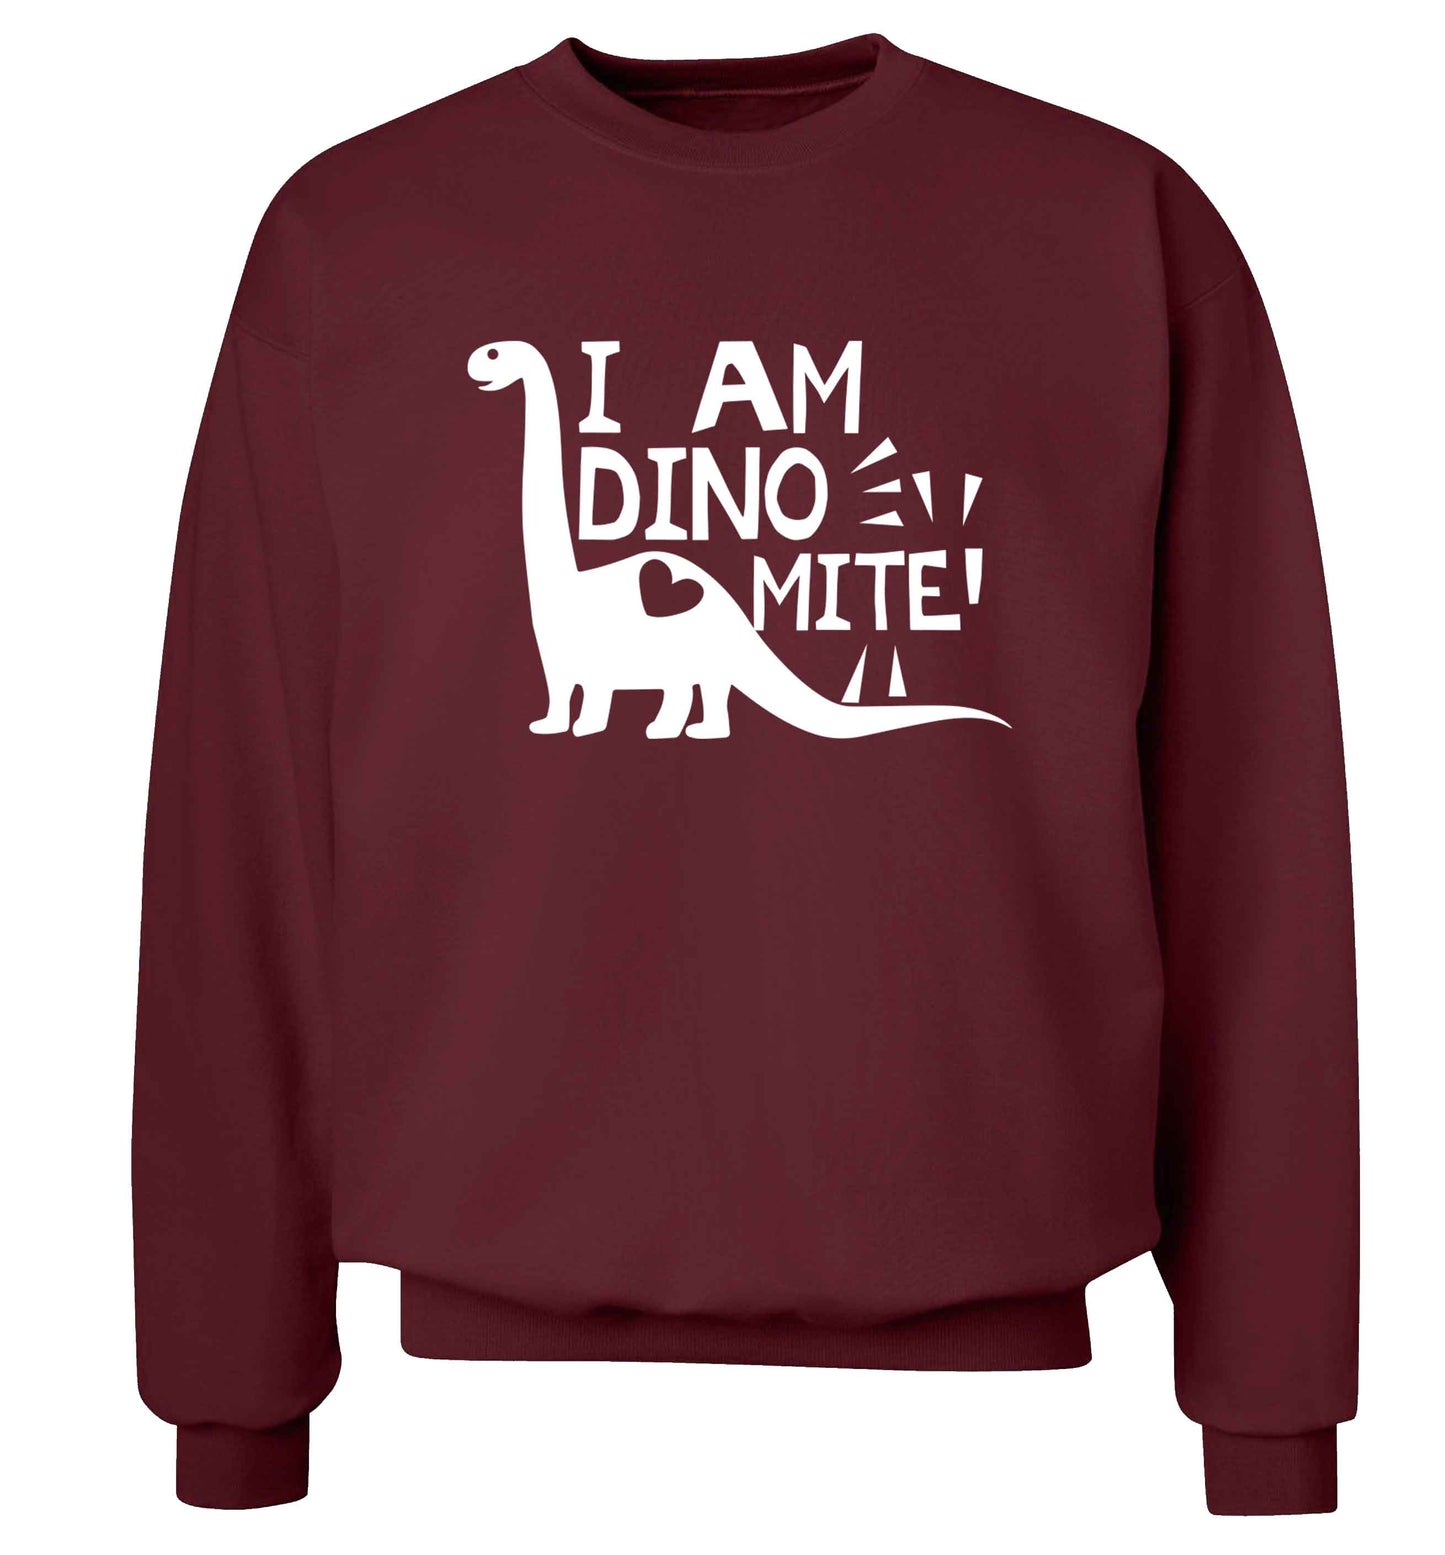 I am dinomite! Adult's unisex maroon Sweater 2XL